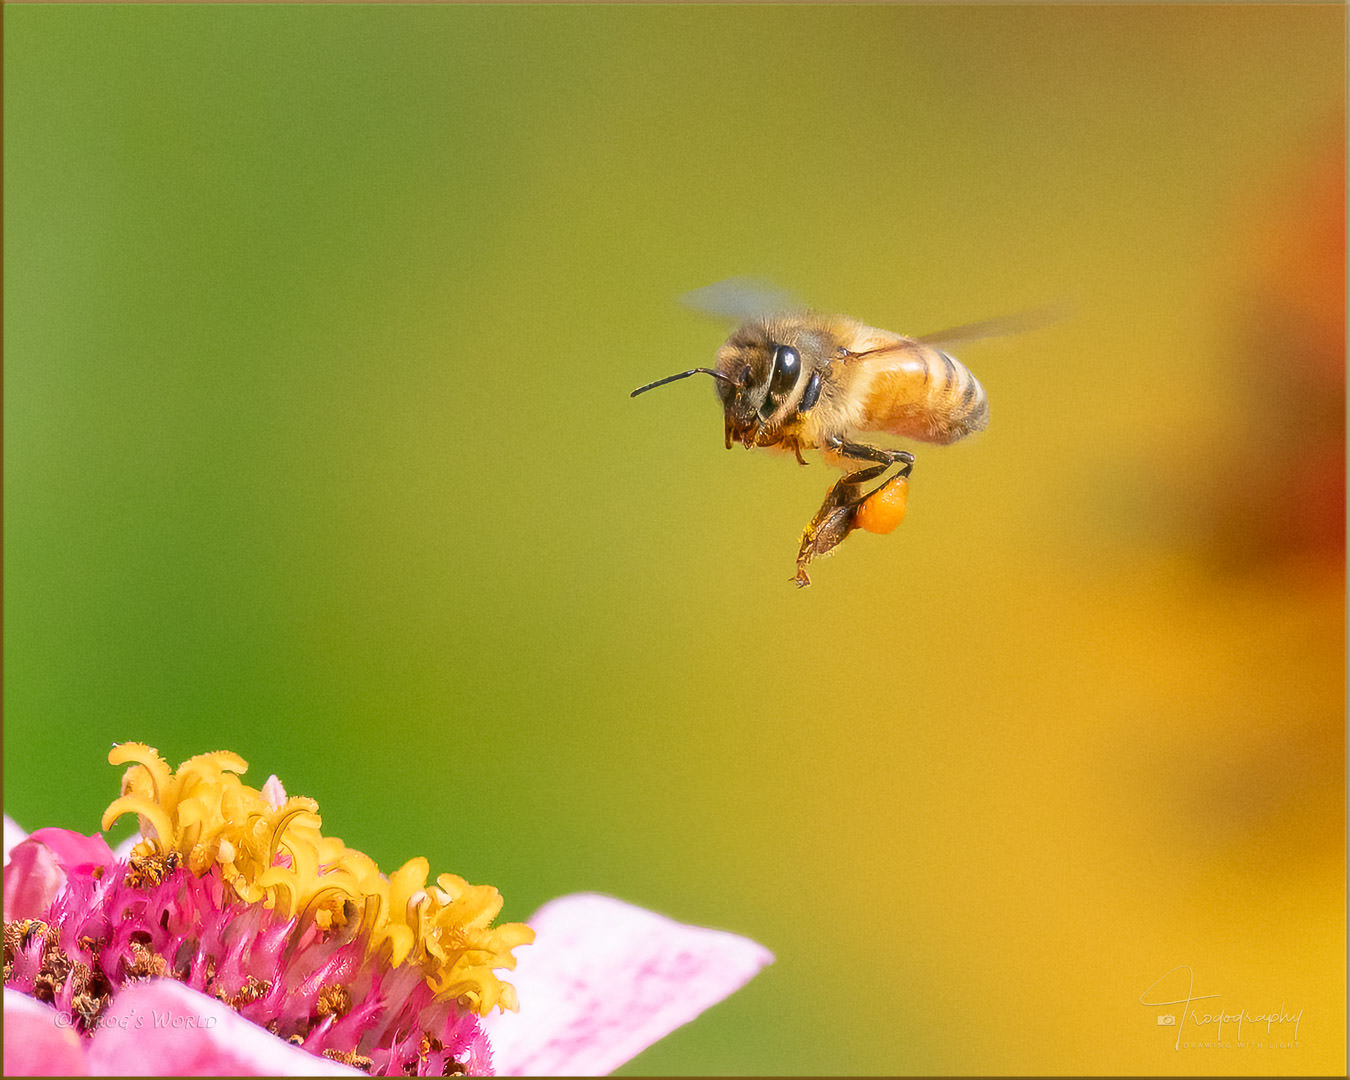 Honey Bee in flight with a pollen sac